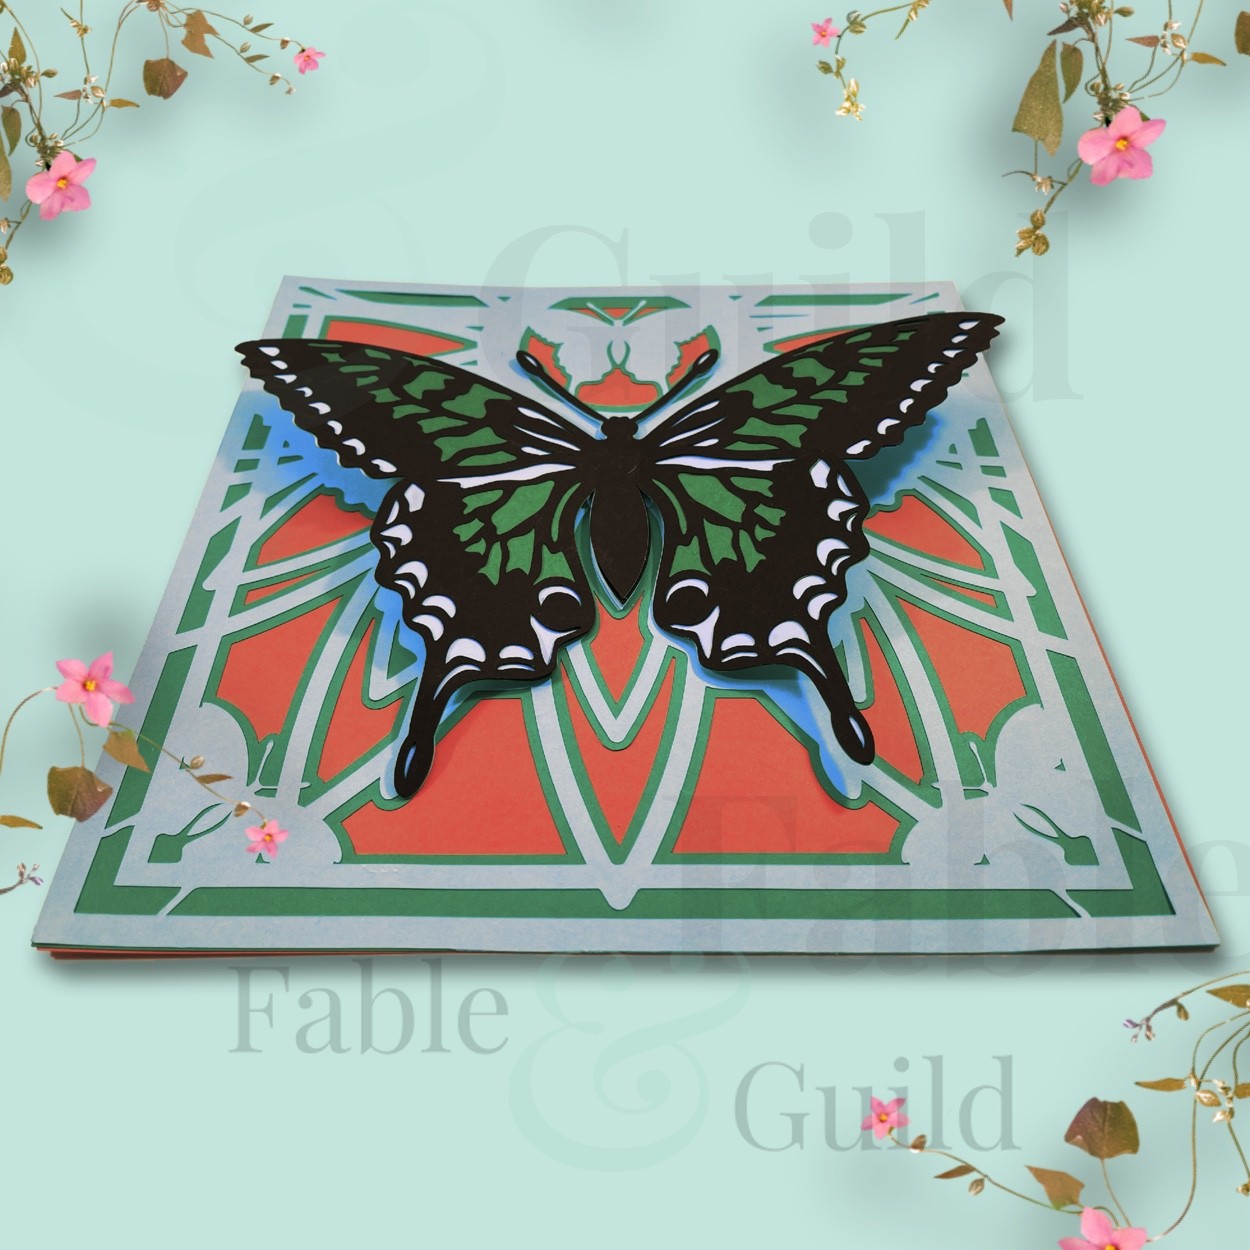 Download Gorgeous 3d Butterfly Mandala Svg Cut File Fable Guild